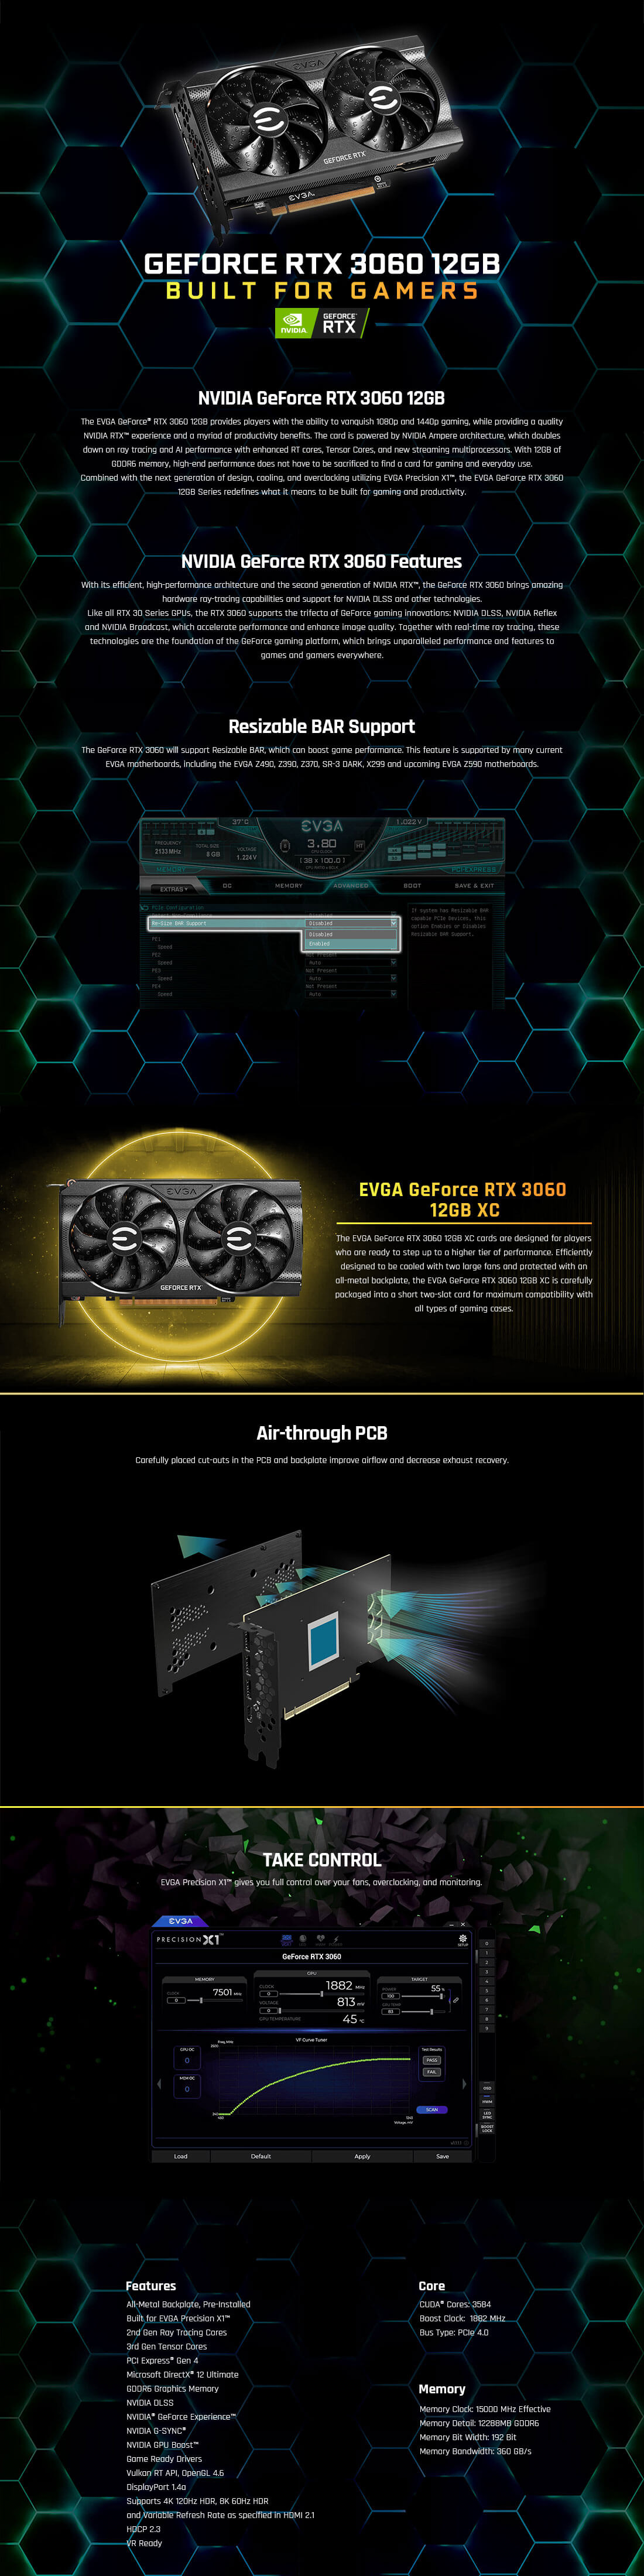 EVGA GeForce RTX 3060 XC GAMING, 12G-P5-3657-KR, 12GB GDDR6, Dual-Fan, Metal Backplate